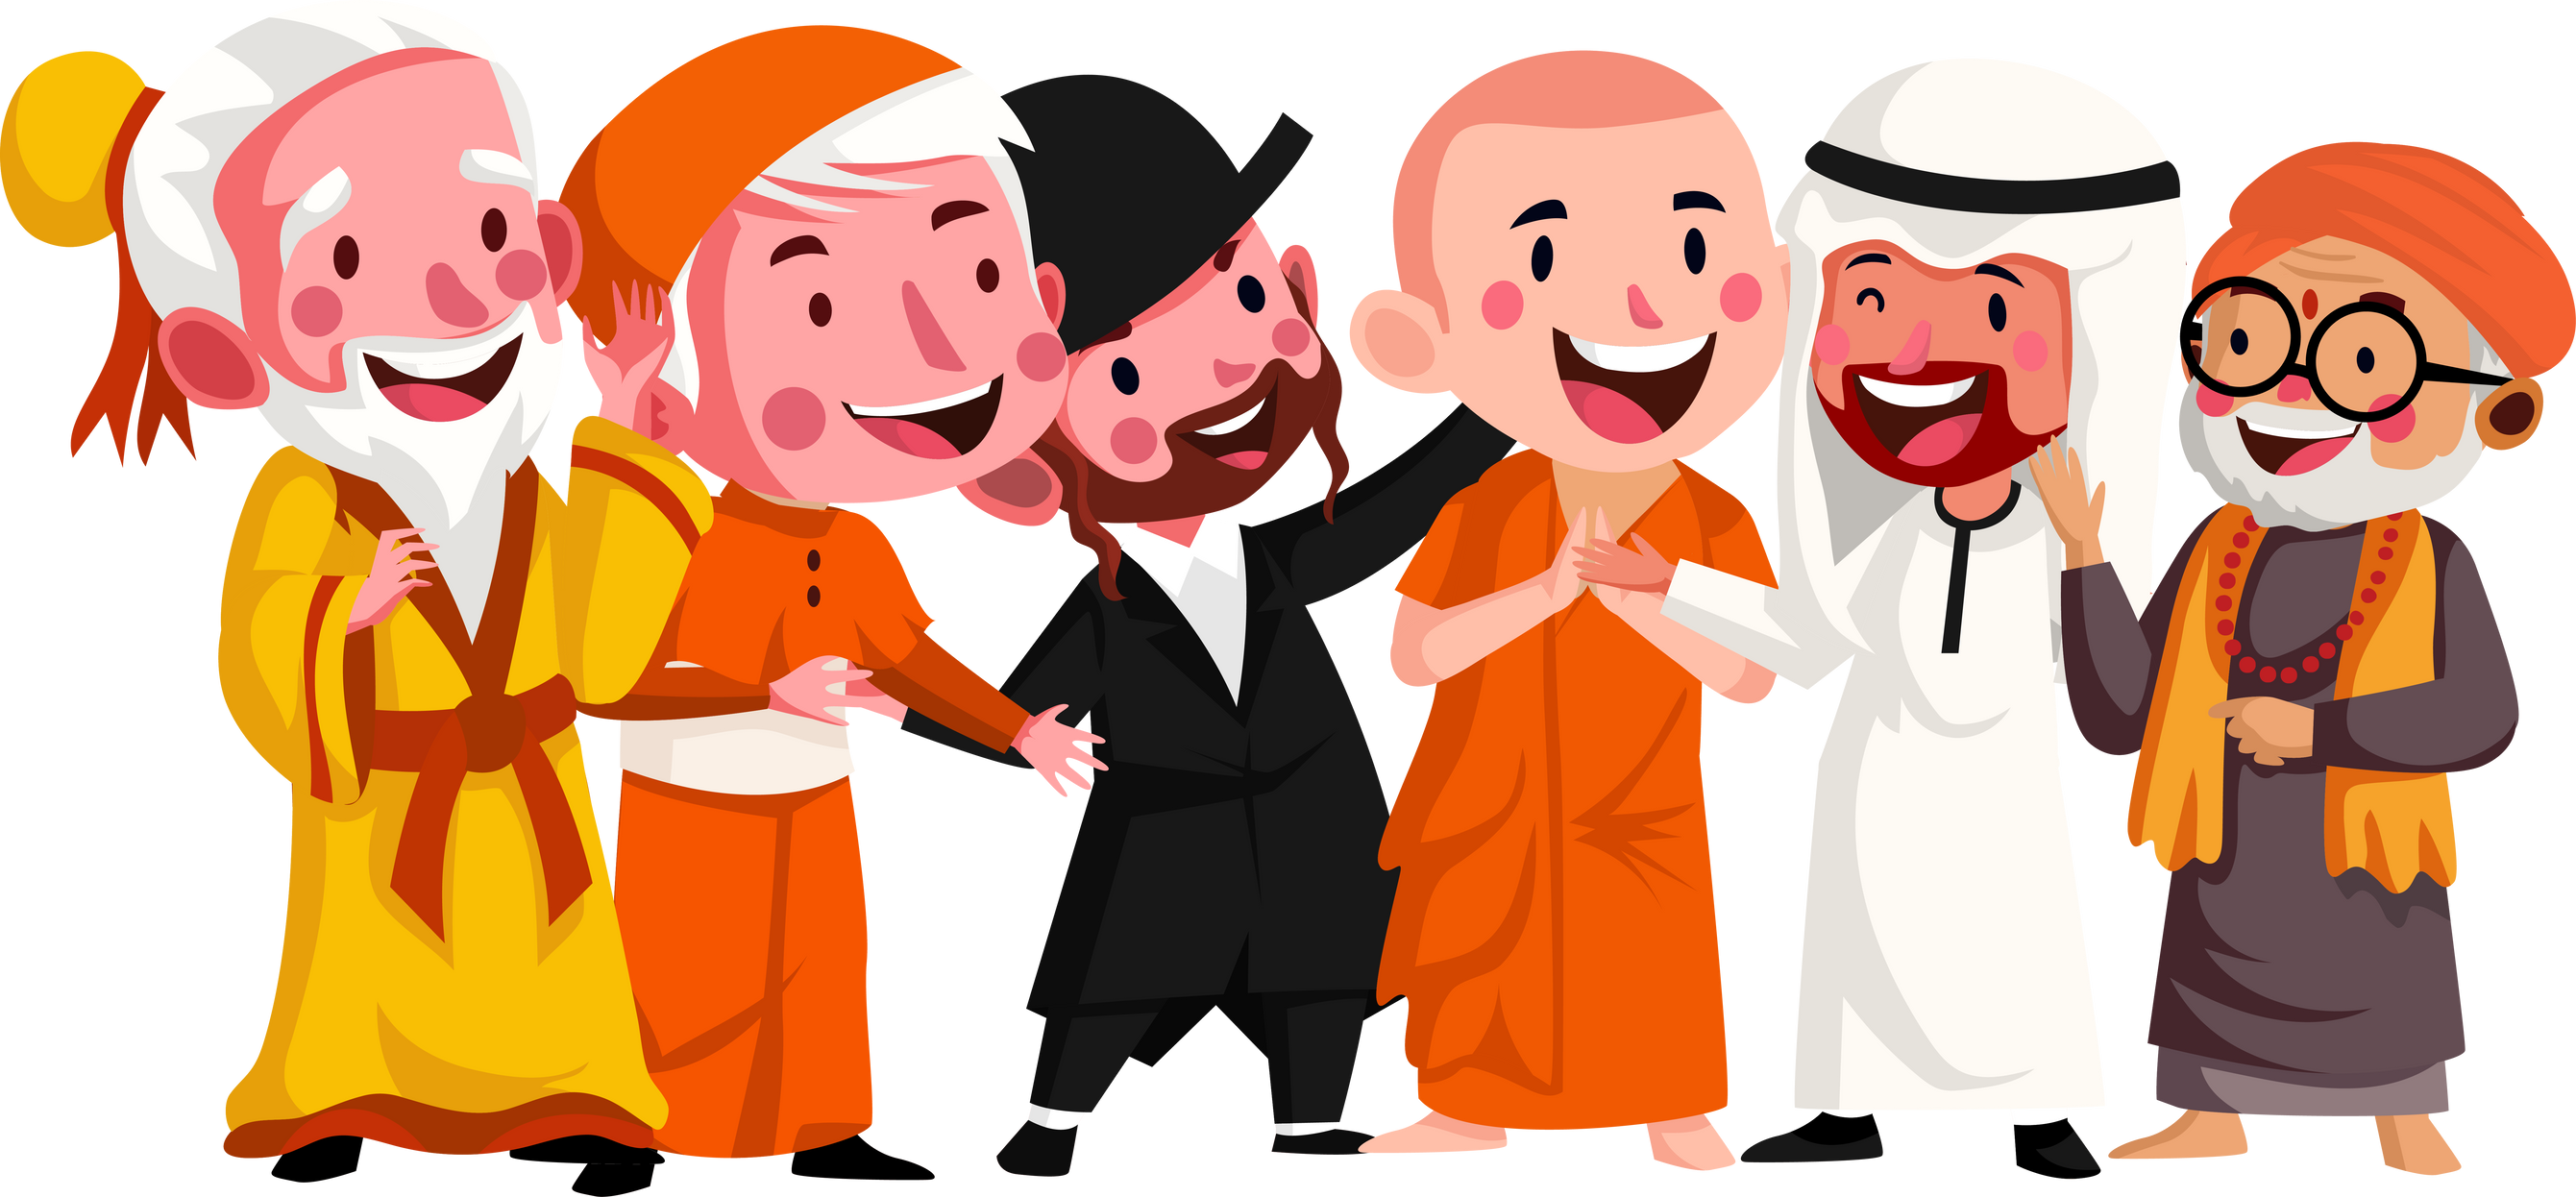 Diversity Religion People Cartoon Illustration